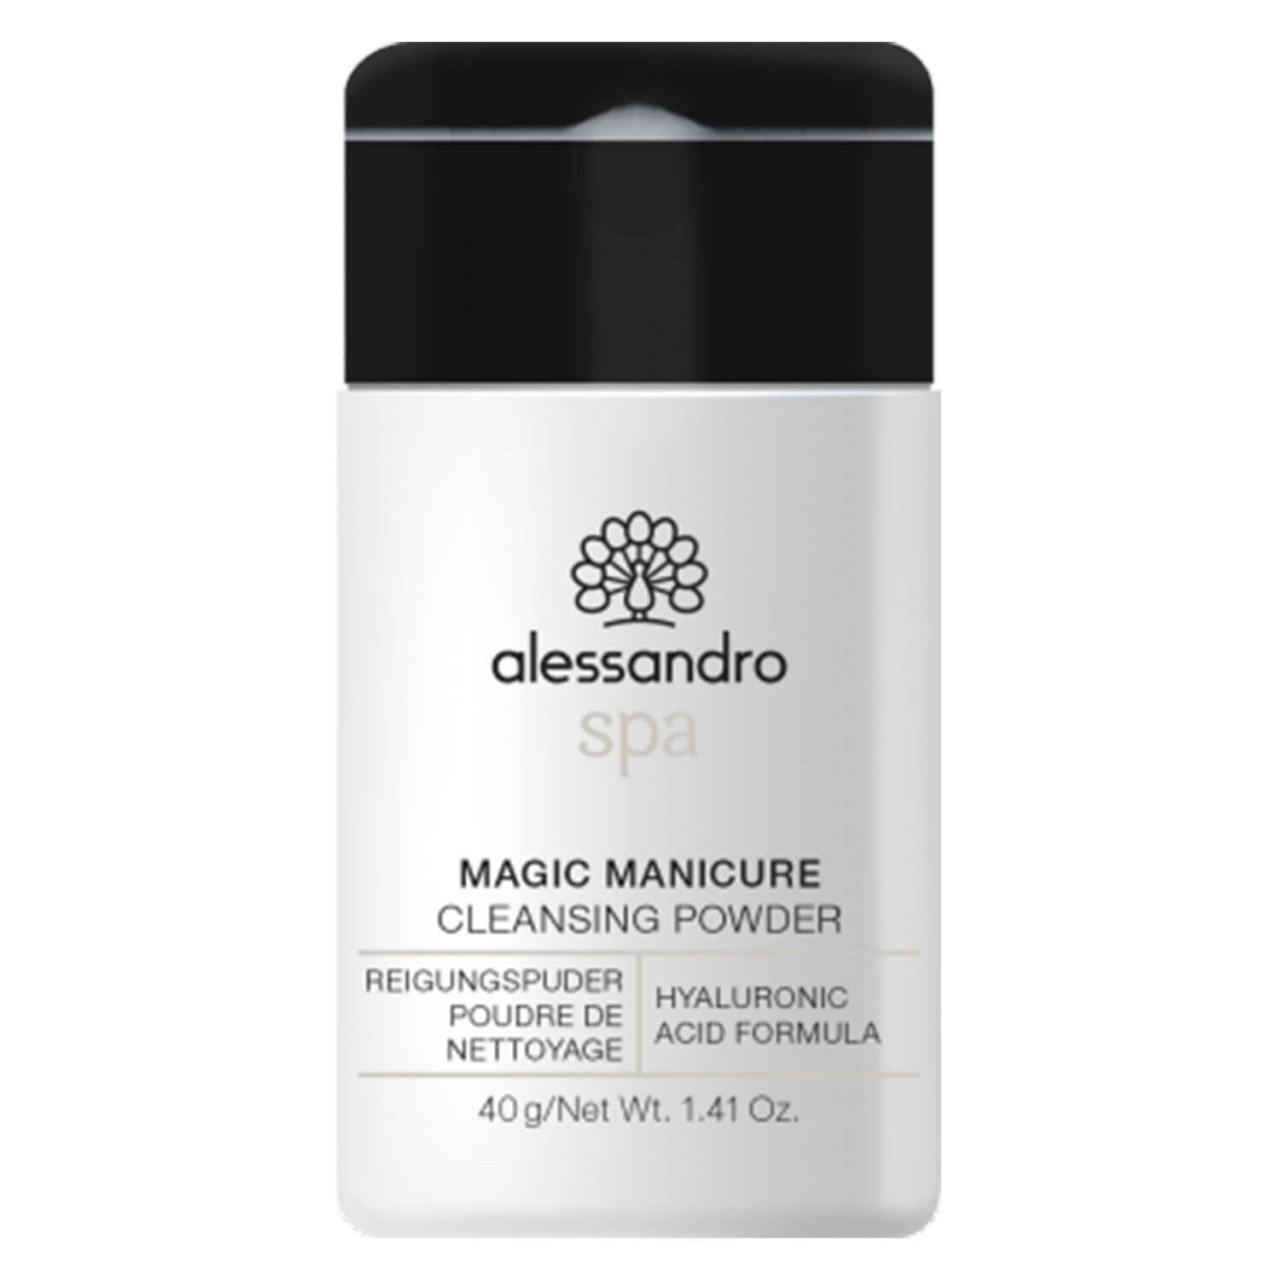 Alessandro Spa - Magic Manicure Cleansing Powder von Alessandro